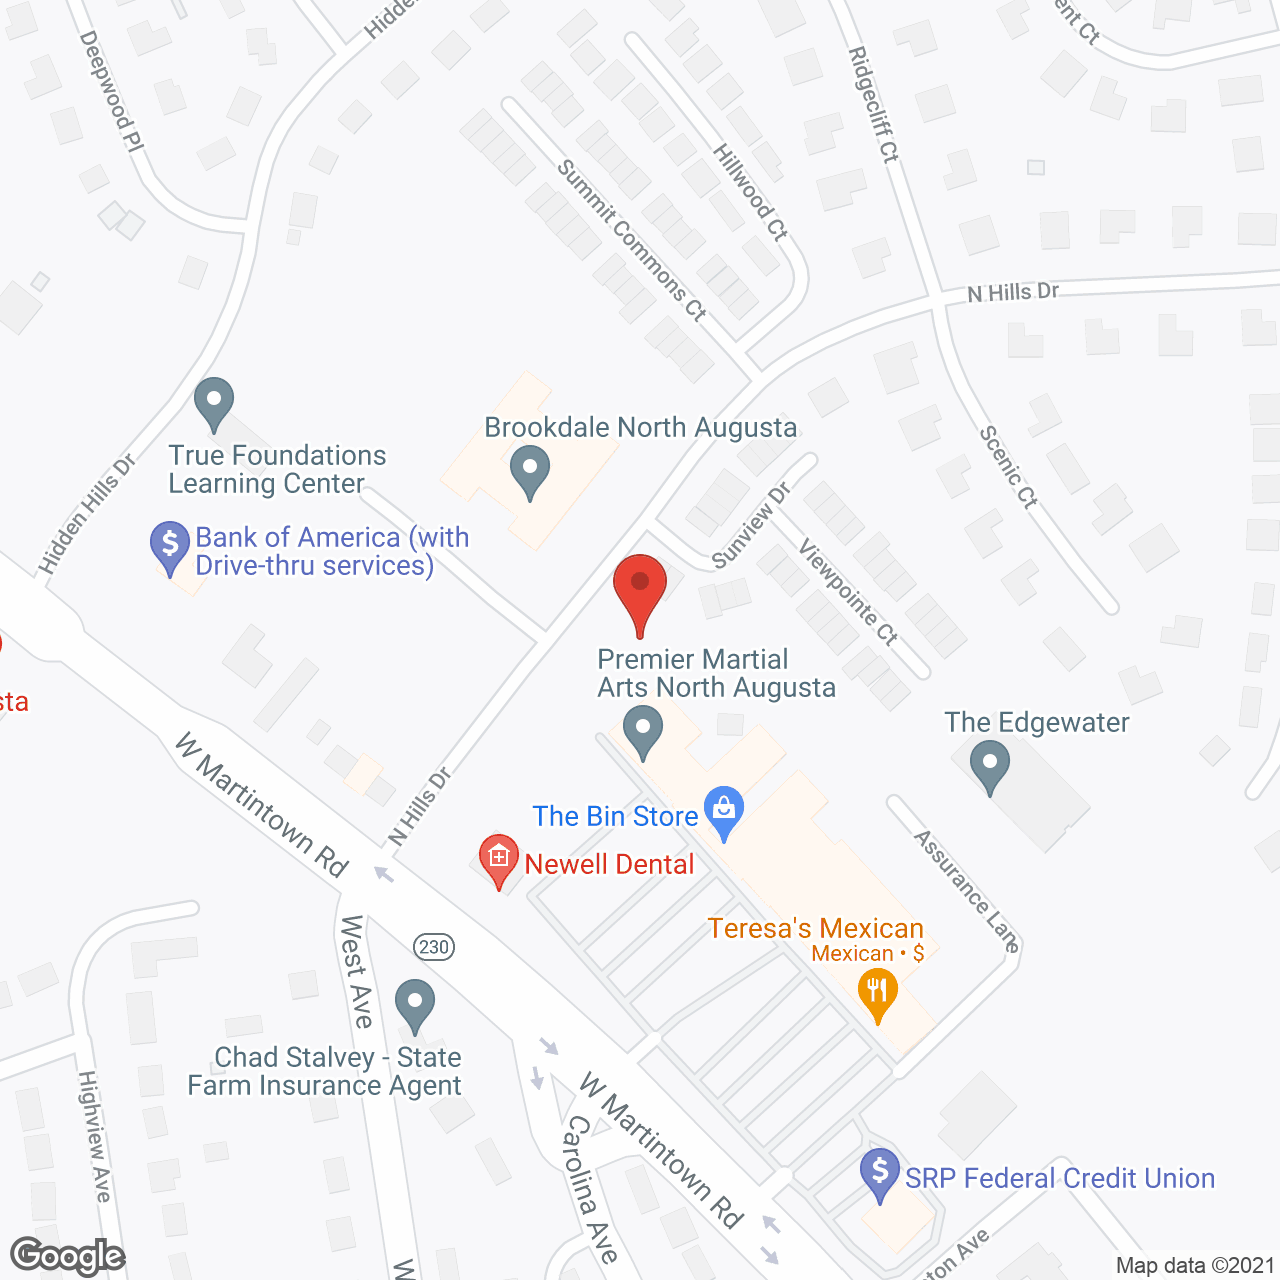 Brookdale North Augusta in google map